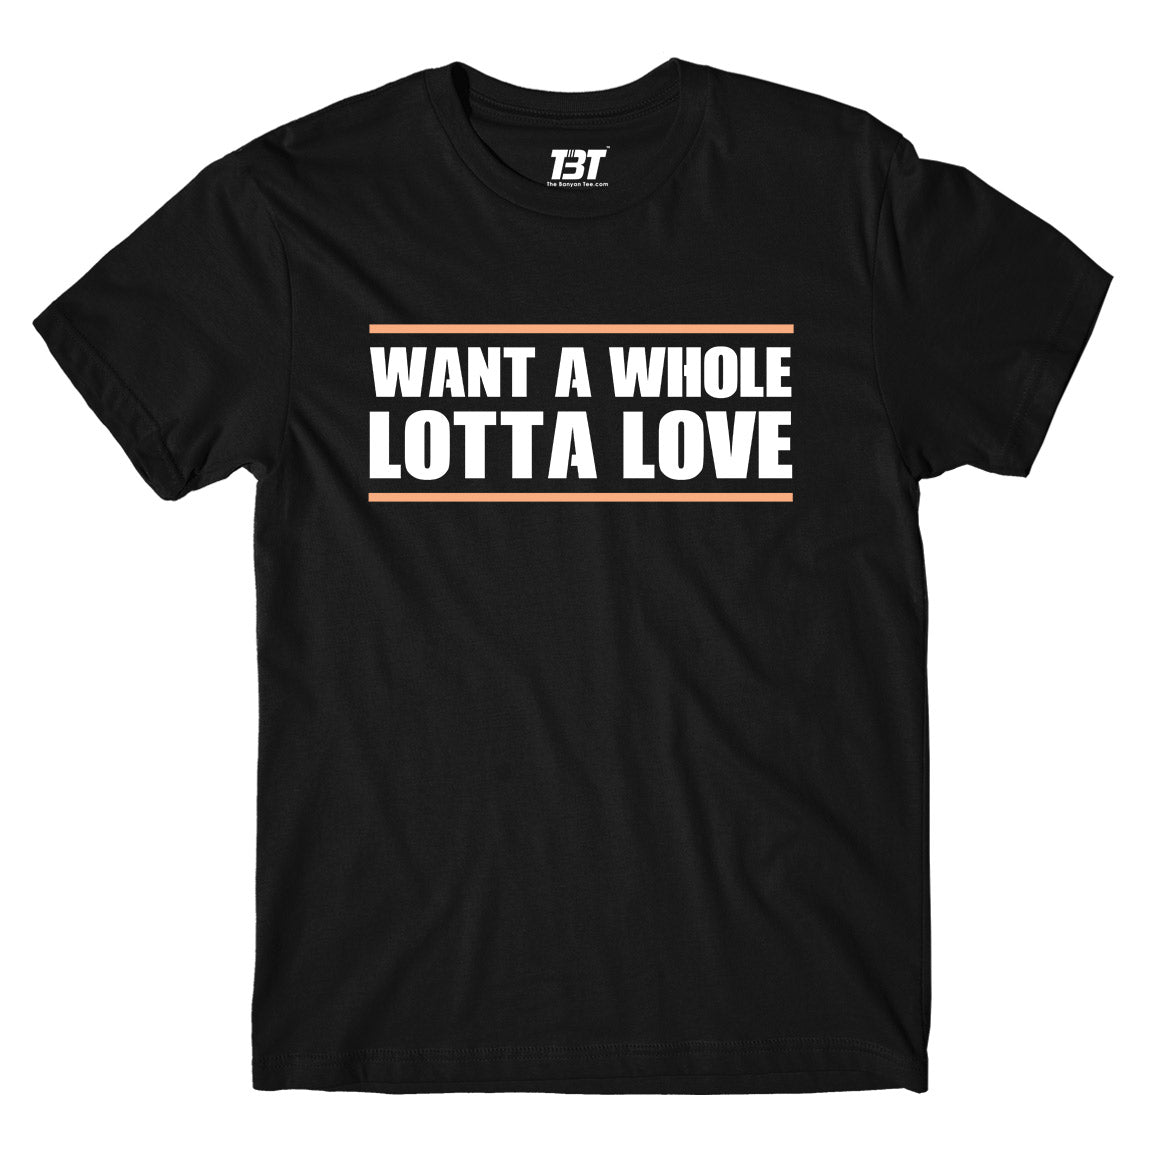 Led Zeppelin T-shirt - Whole Lotta Love T-shirt The Banyan Tee TBT